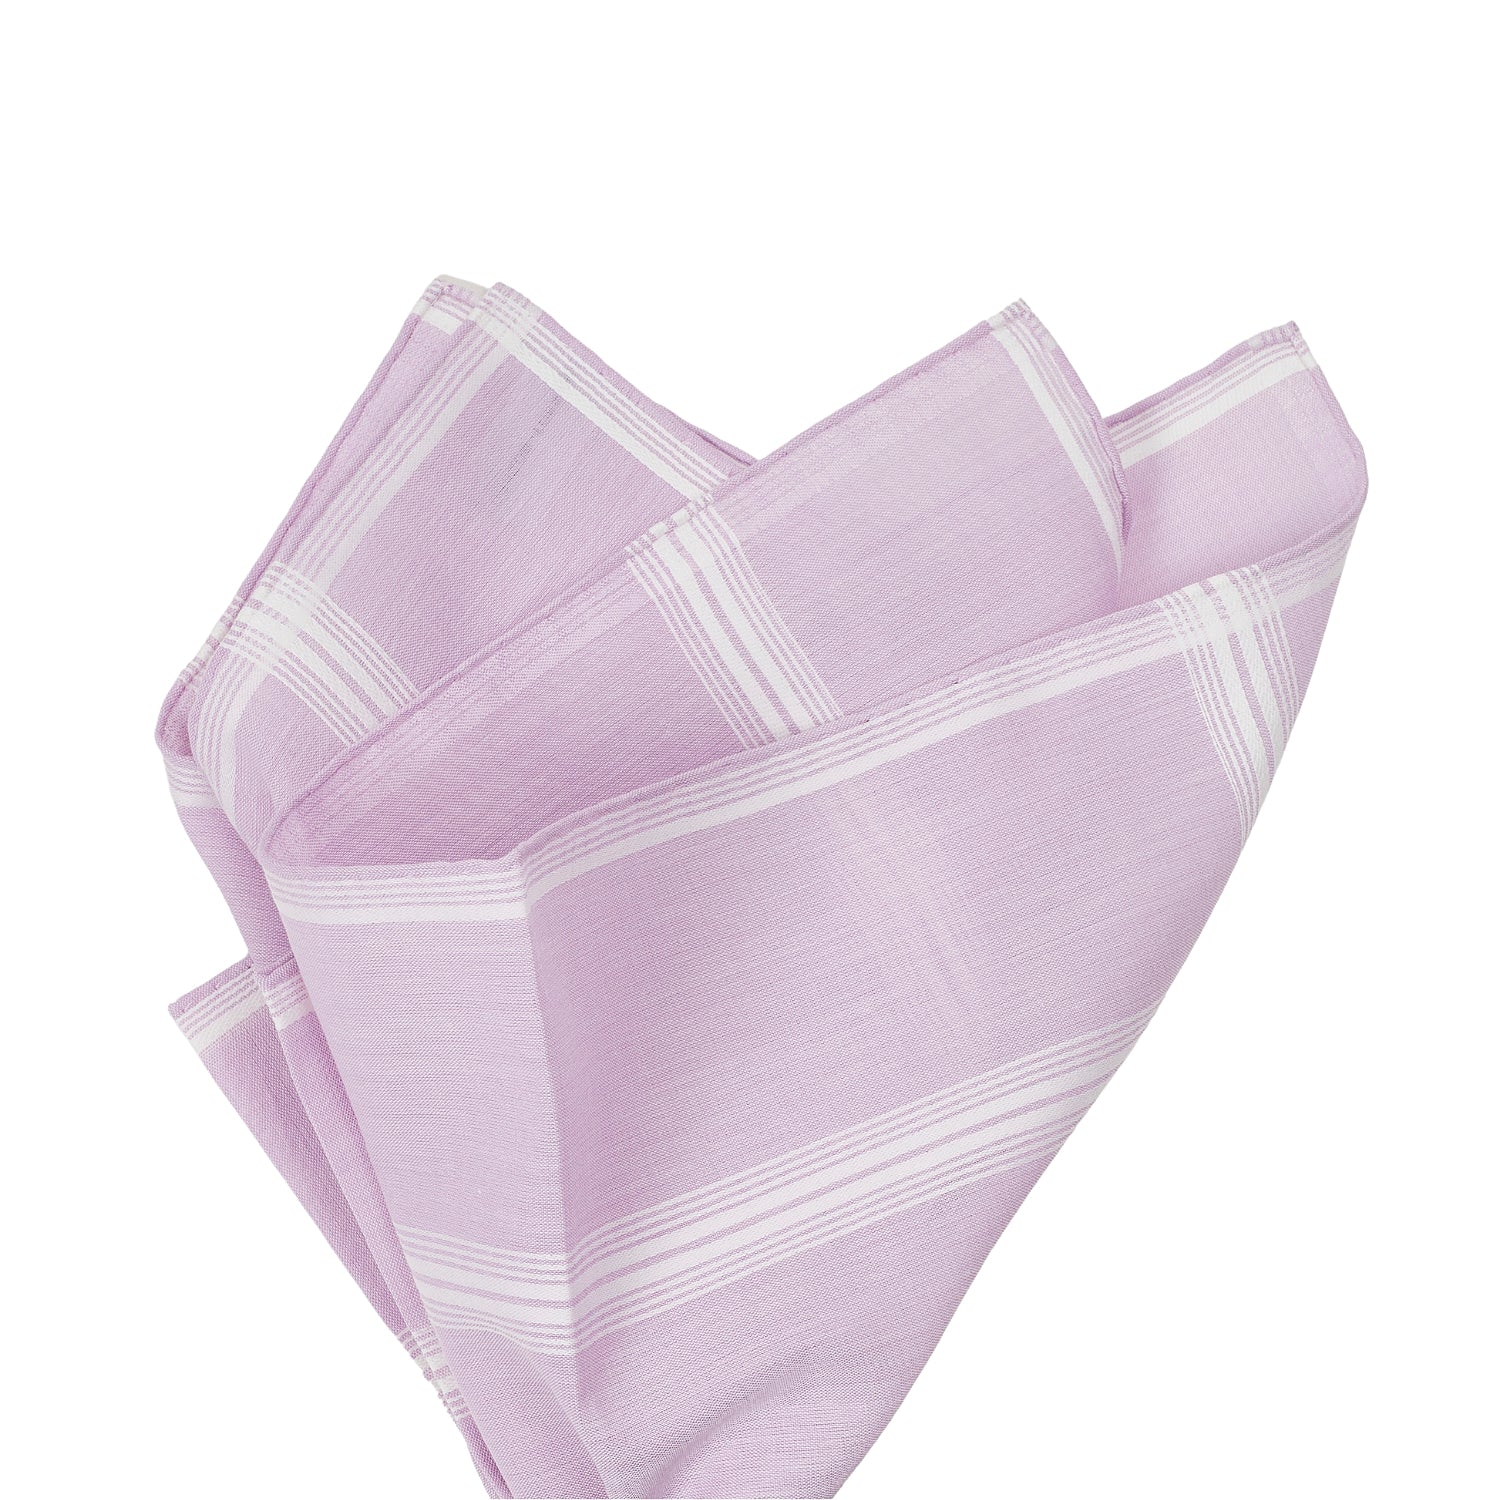 Simonnot Godard Lilac Cotton Handkerchief